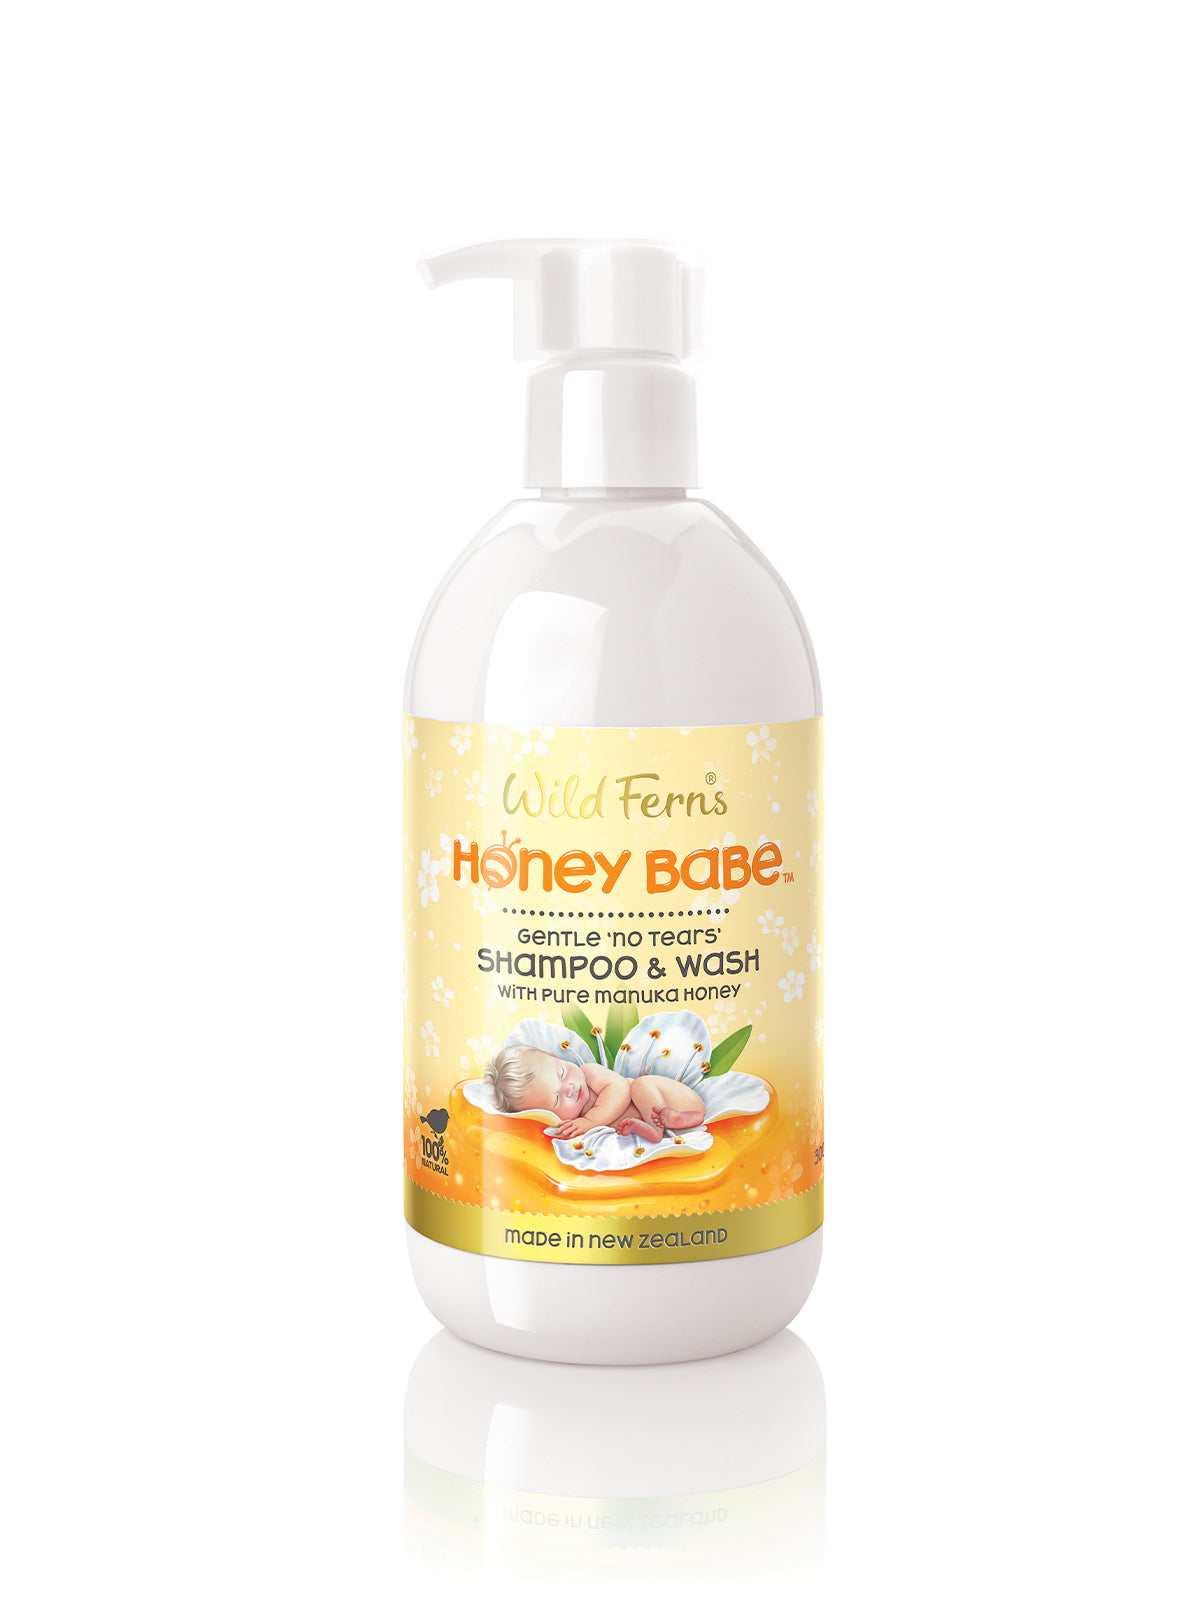 Honey Babe Gentle "No Tears" Shampoo and Wash, 140ml